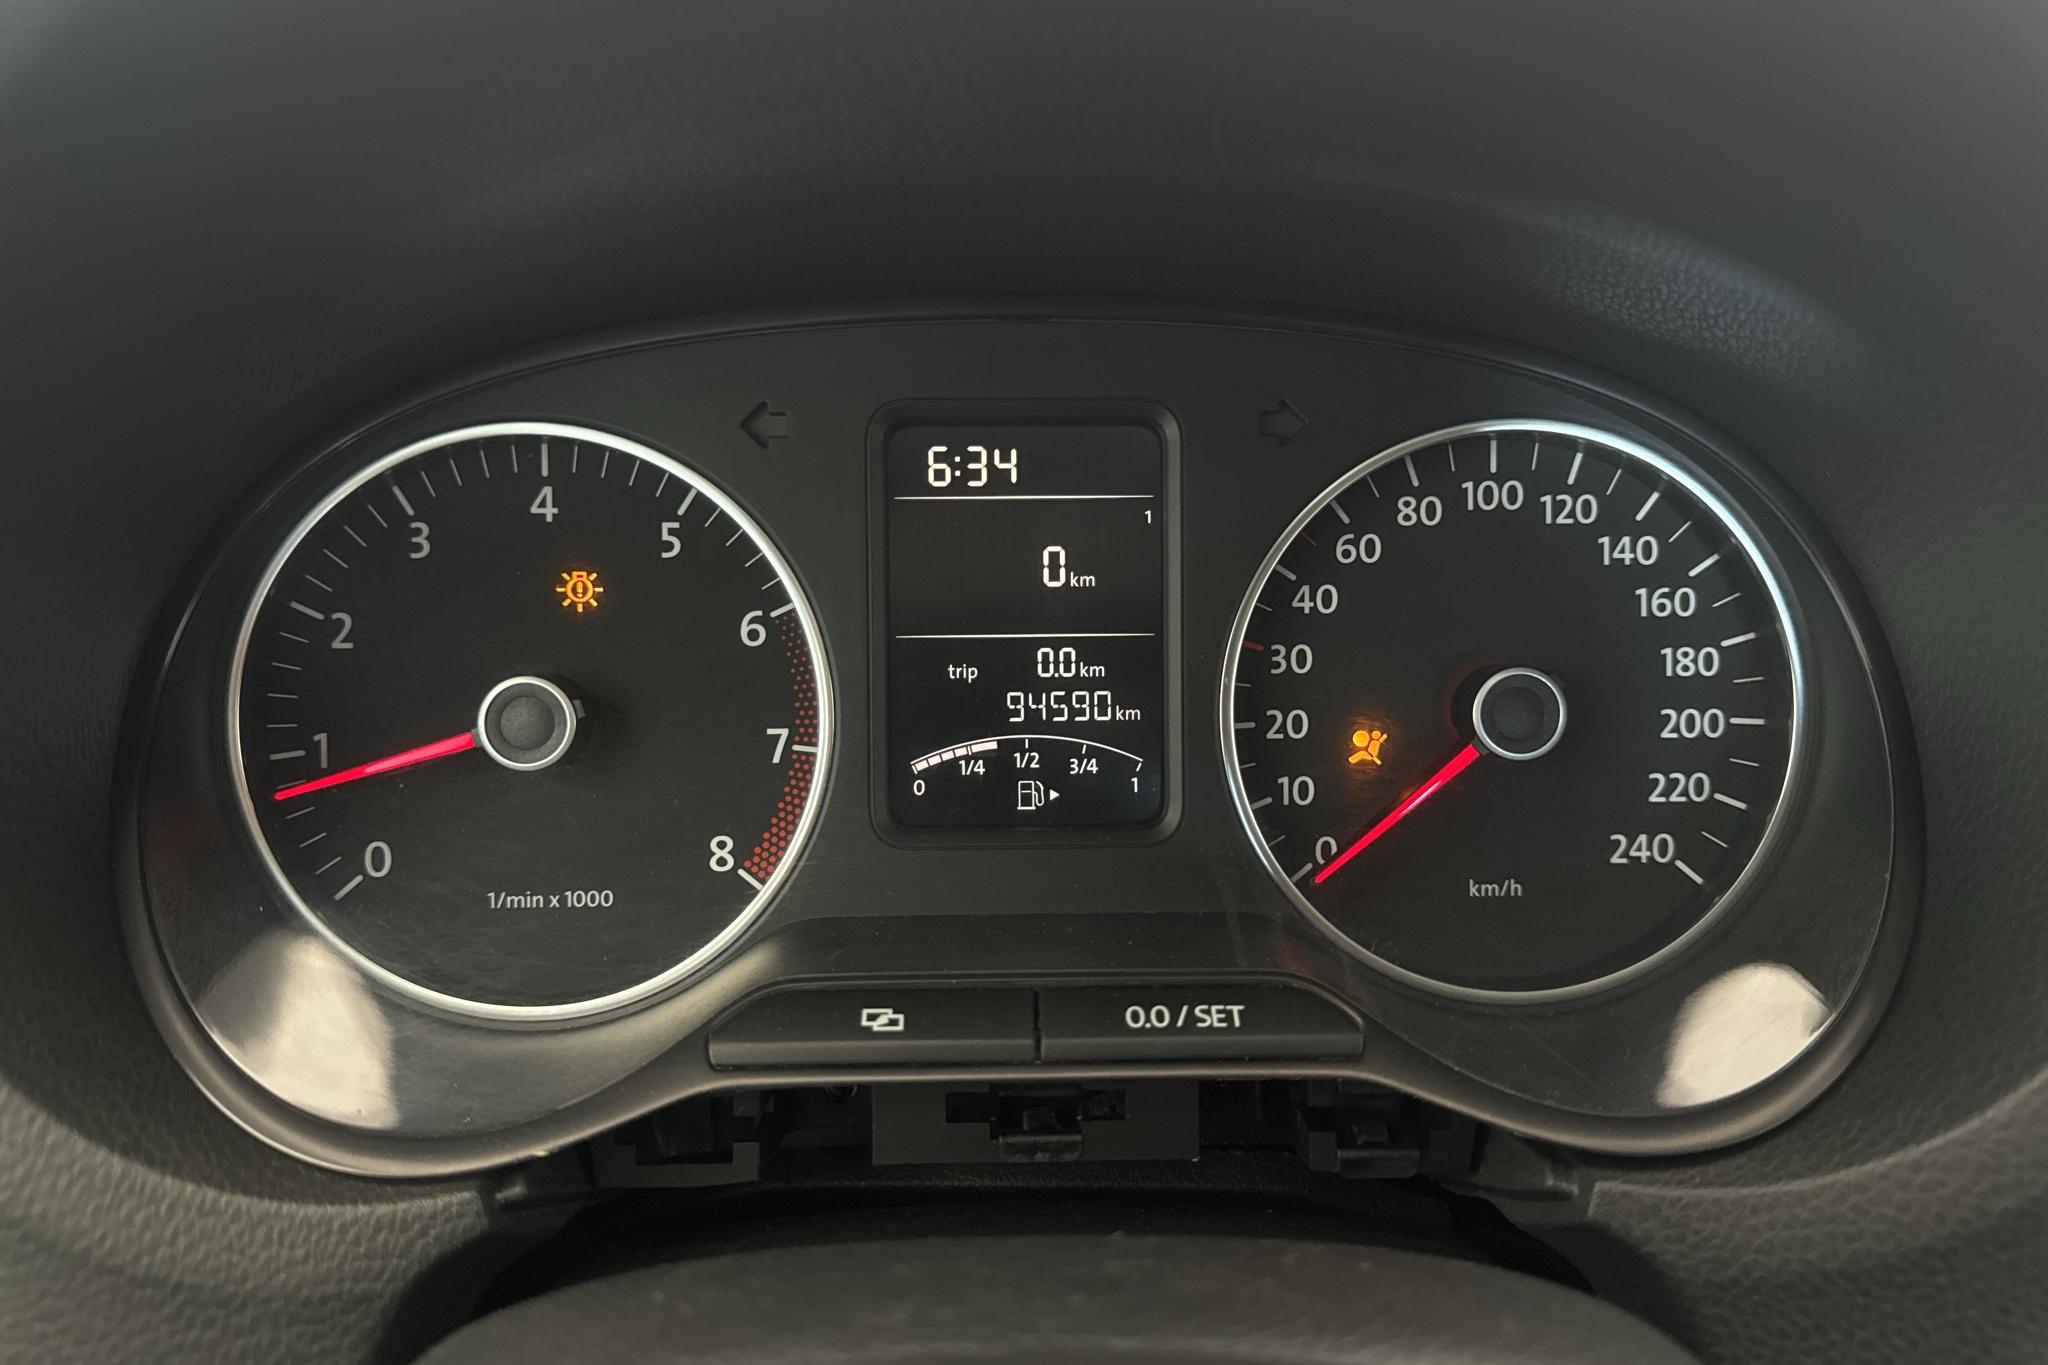 VW Polo 1.4 5dr (85hk) - 94 590 km - Manual - red - 2011